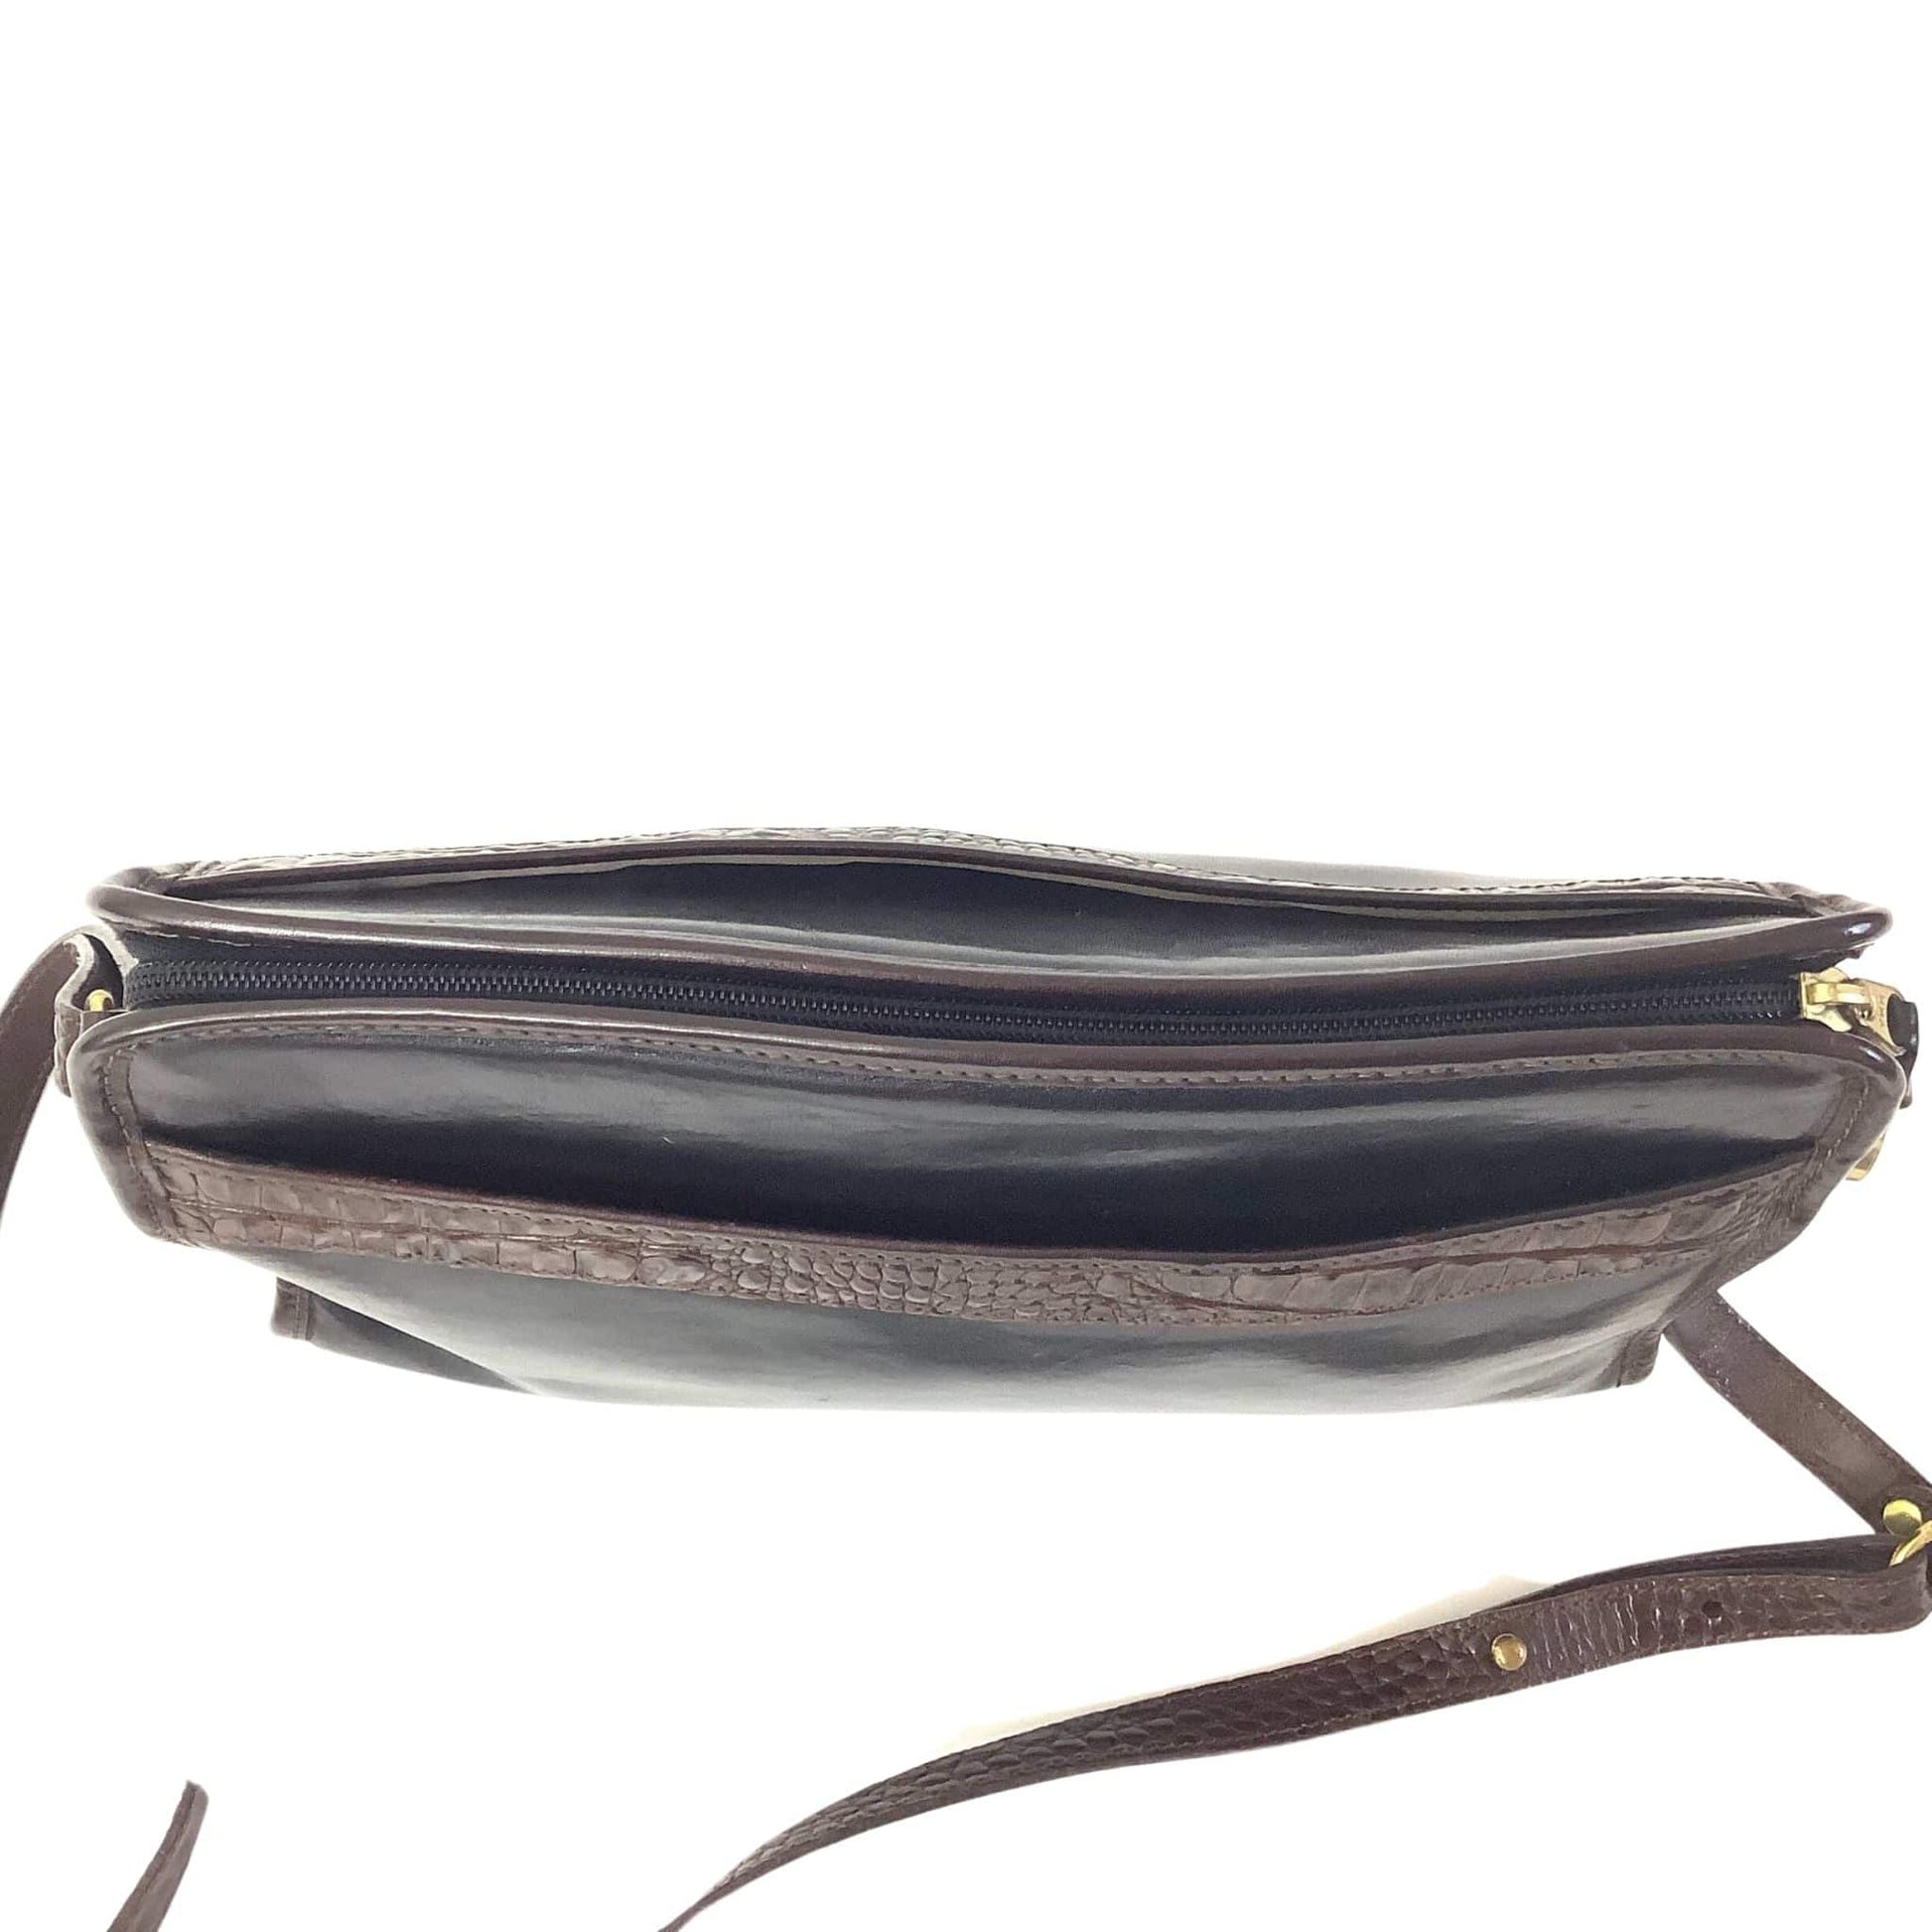 Brahmin esme Komodo ombré croc-embossed leather bag New